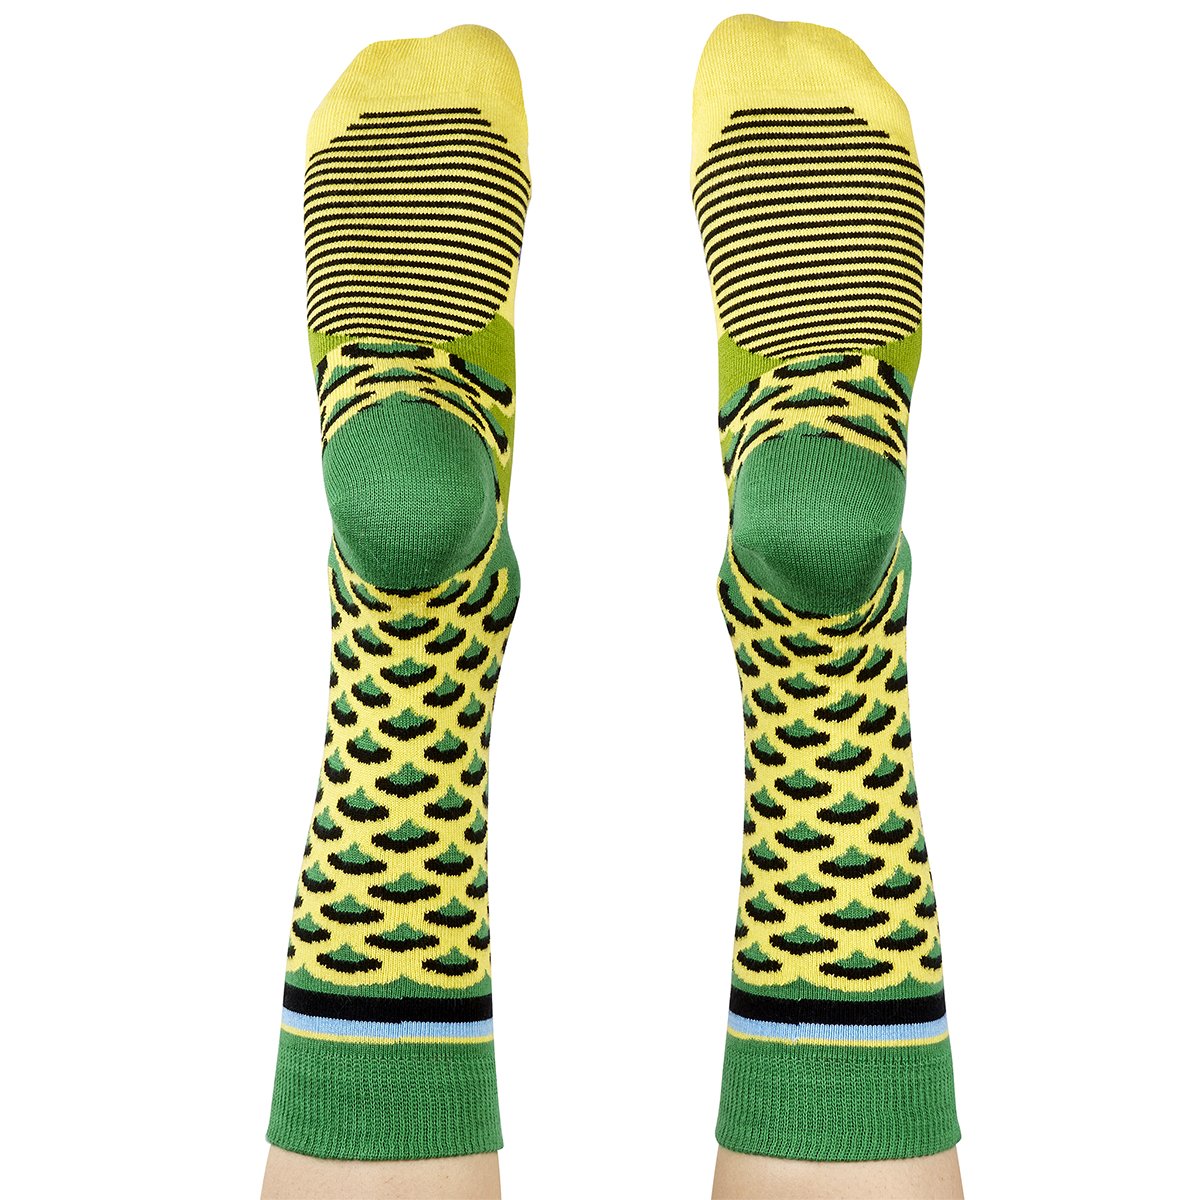 pair of feet wearing green budgie socks -The Sockery